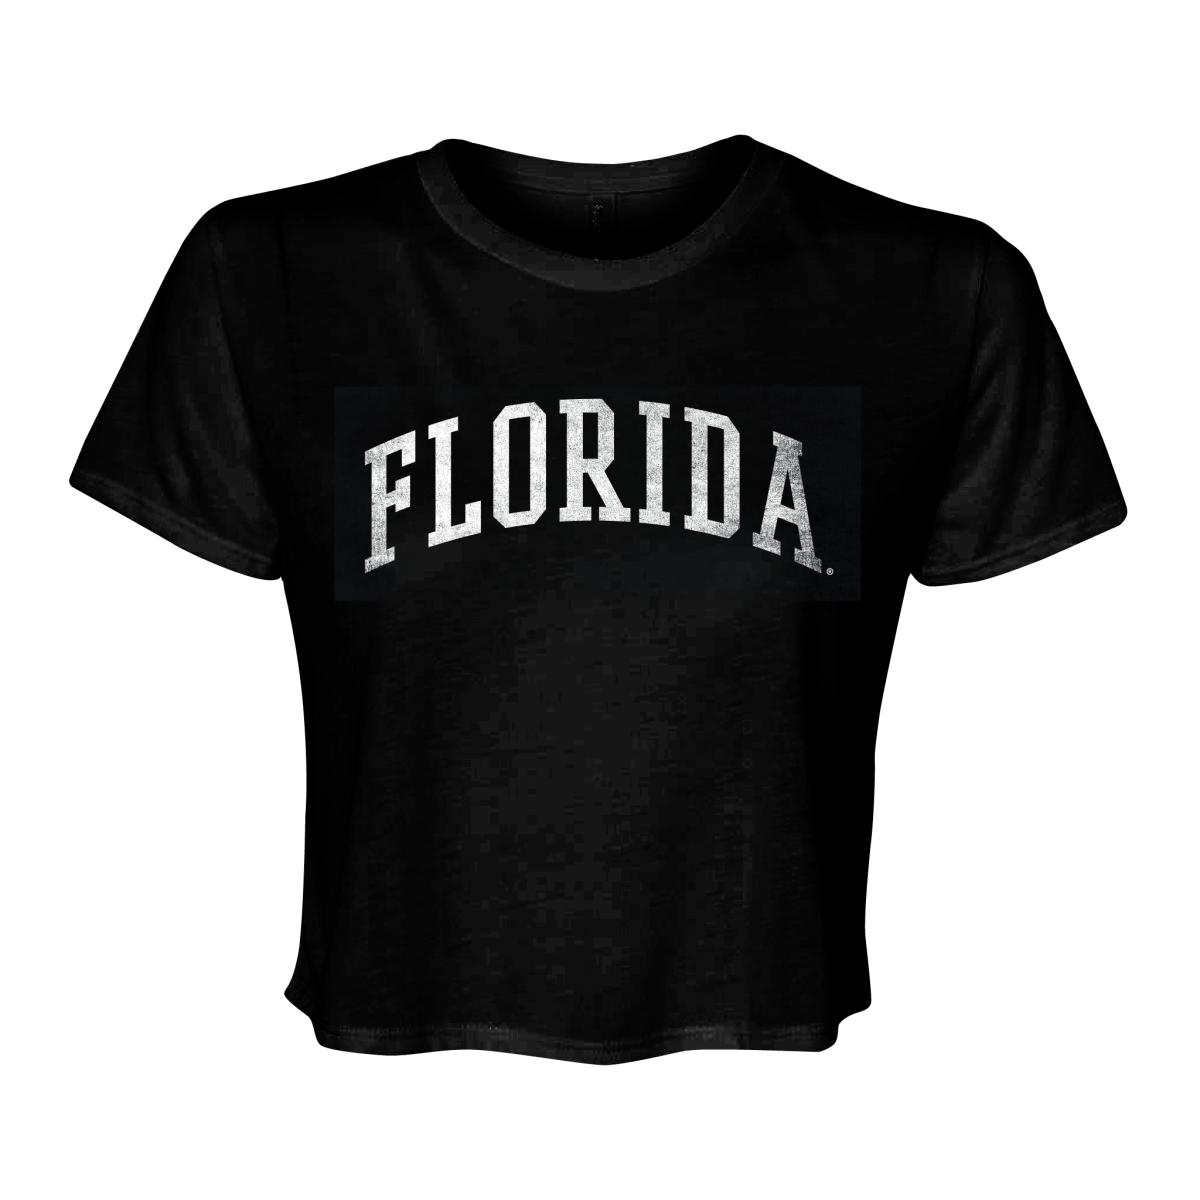 Florida Arched Crop Top